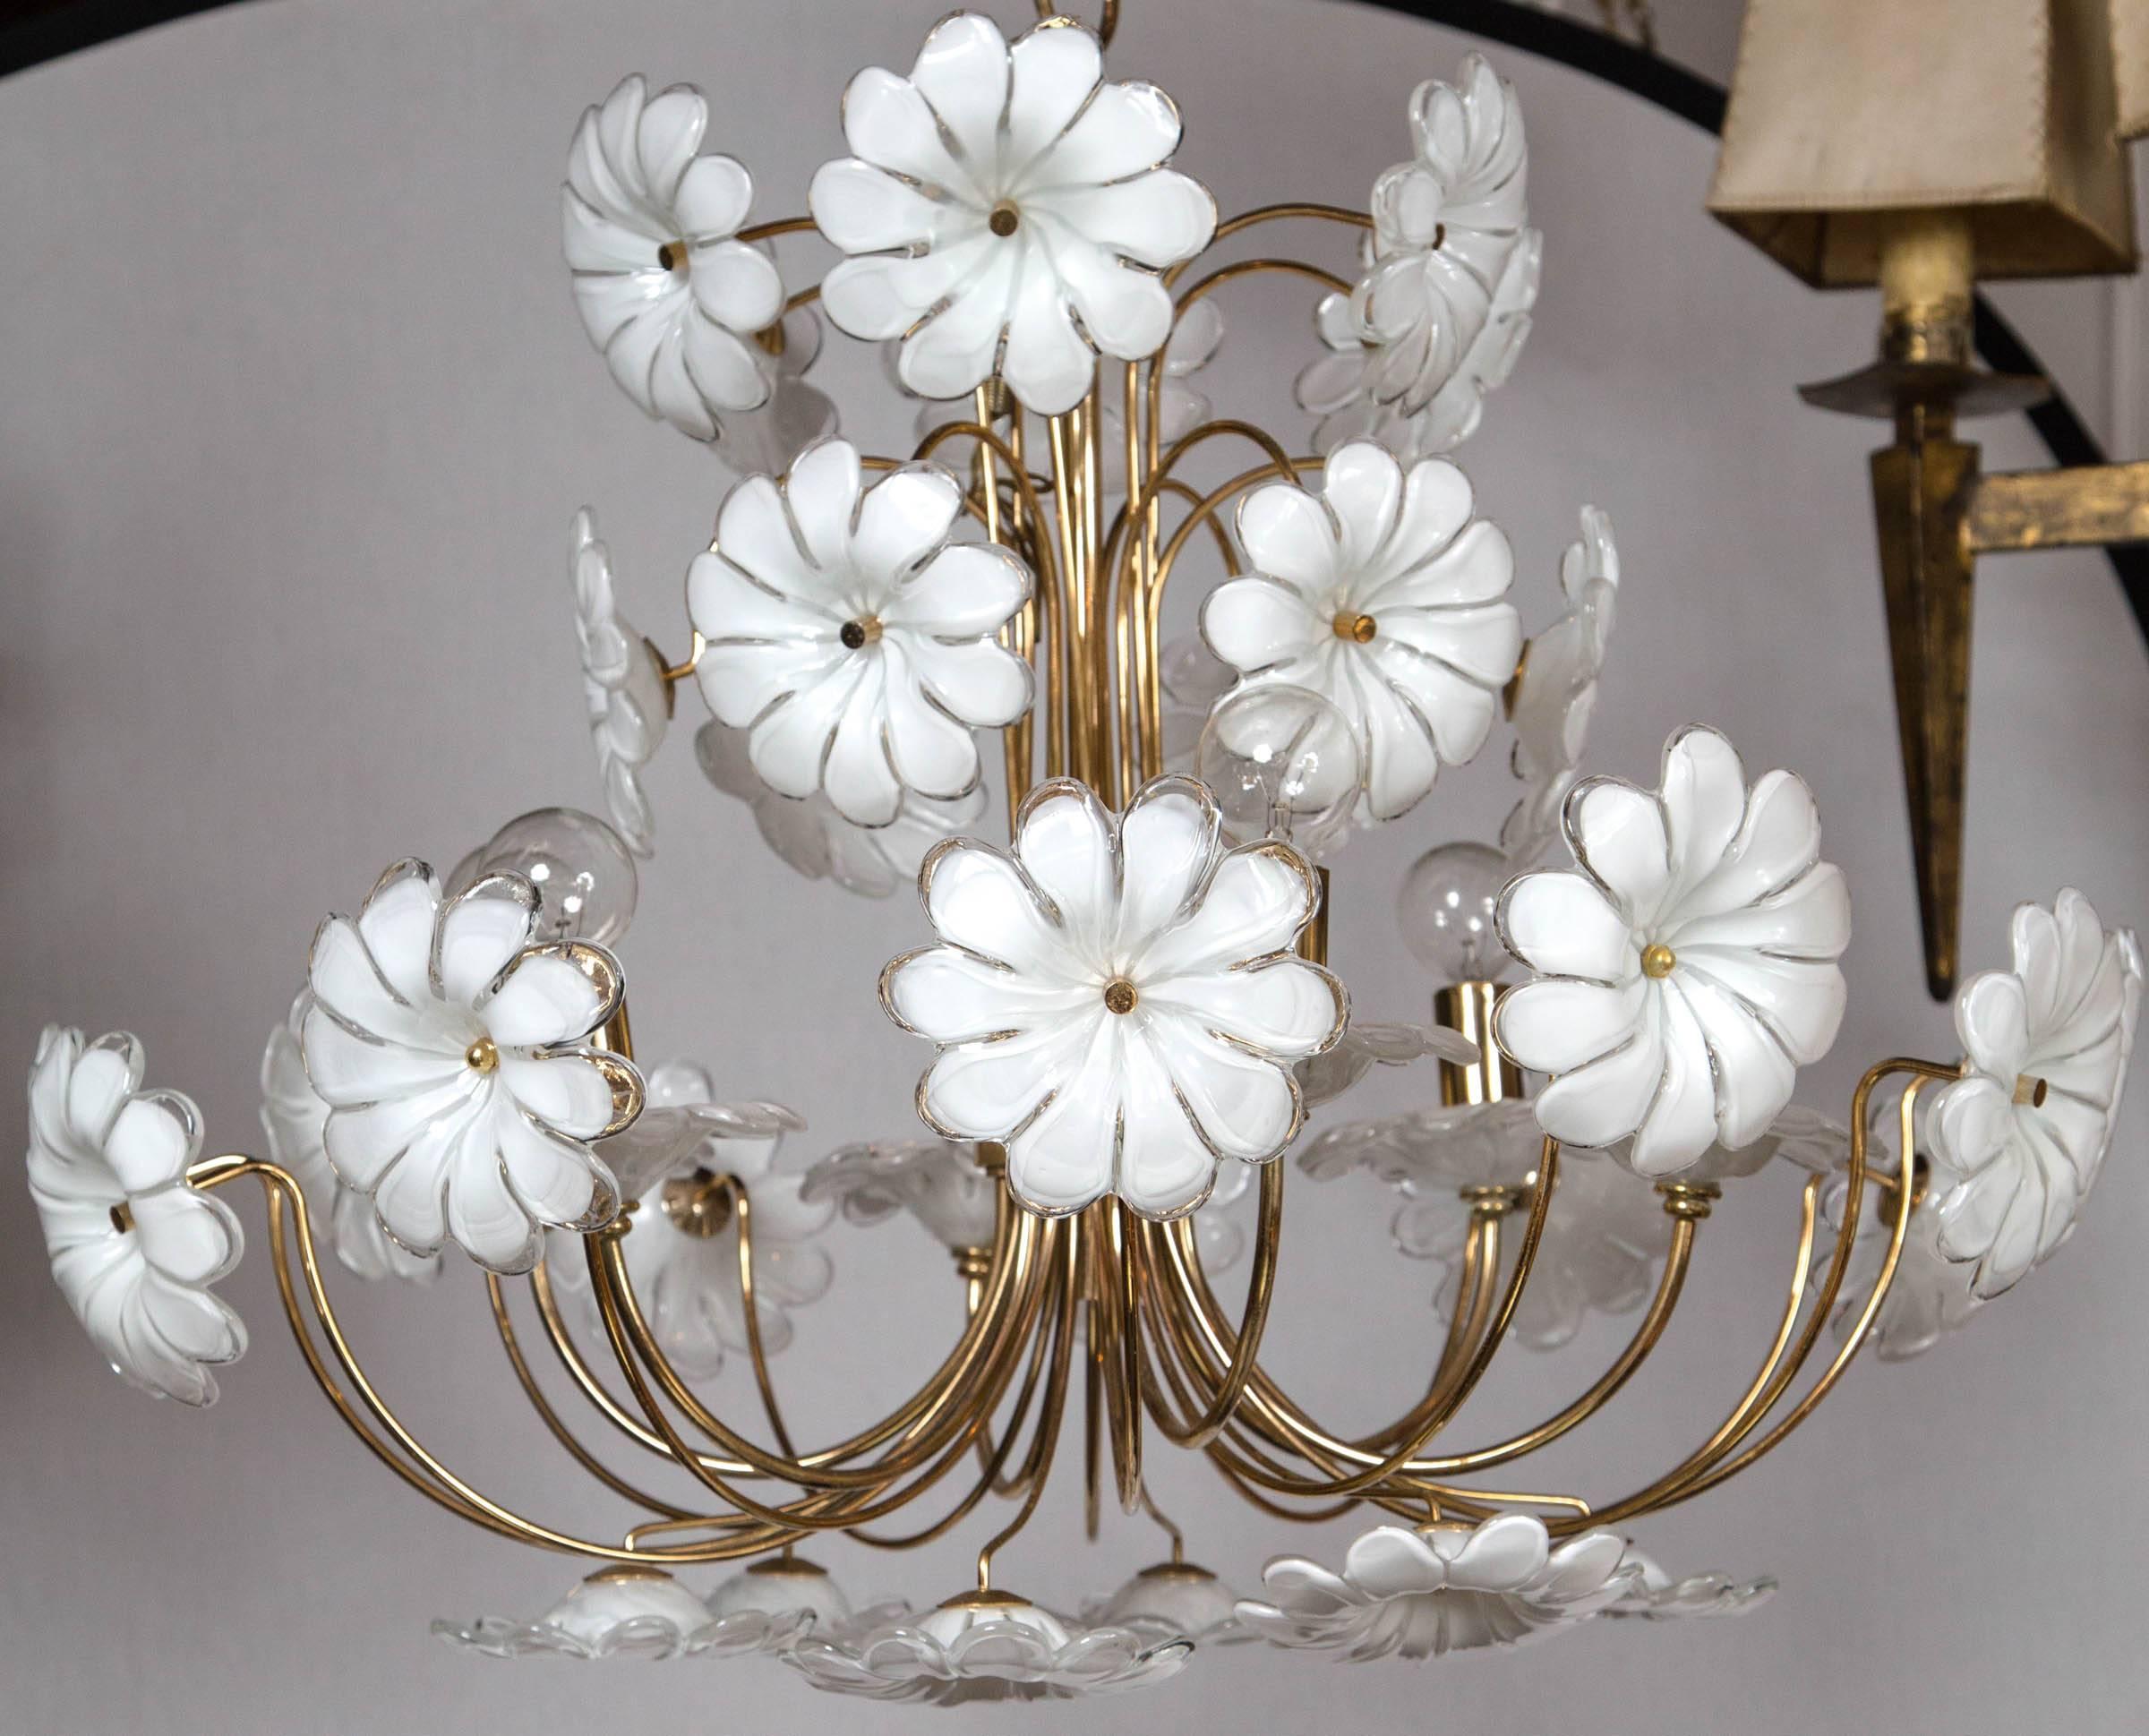 Flower power style Murano Venetian glass flower chandelier. One flower has a non noticeable repair.